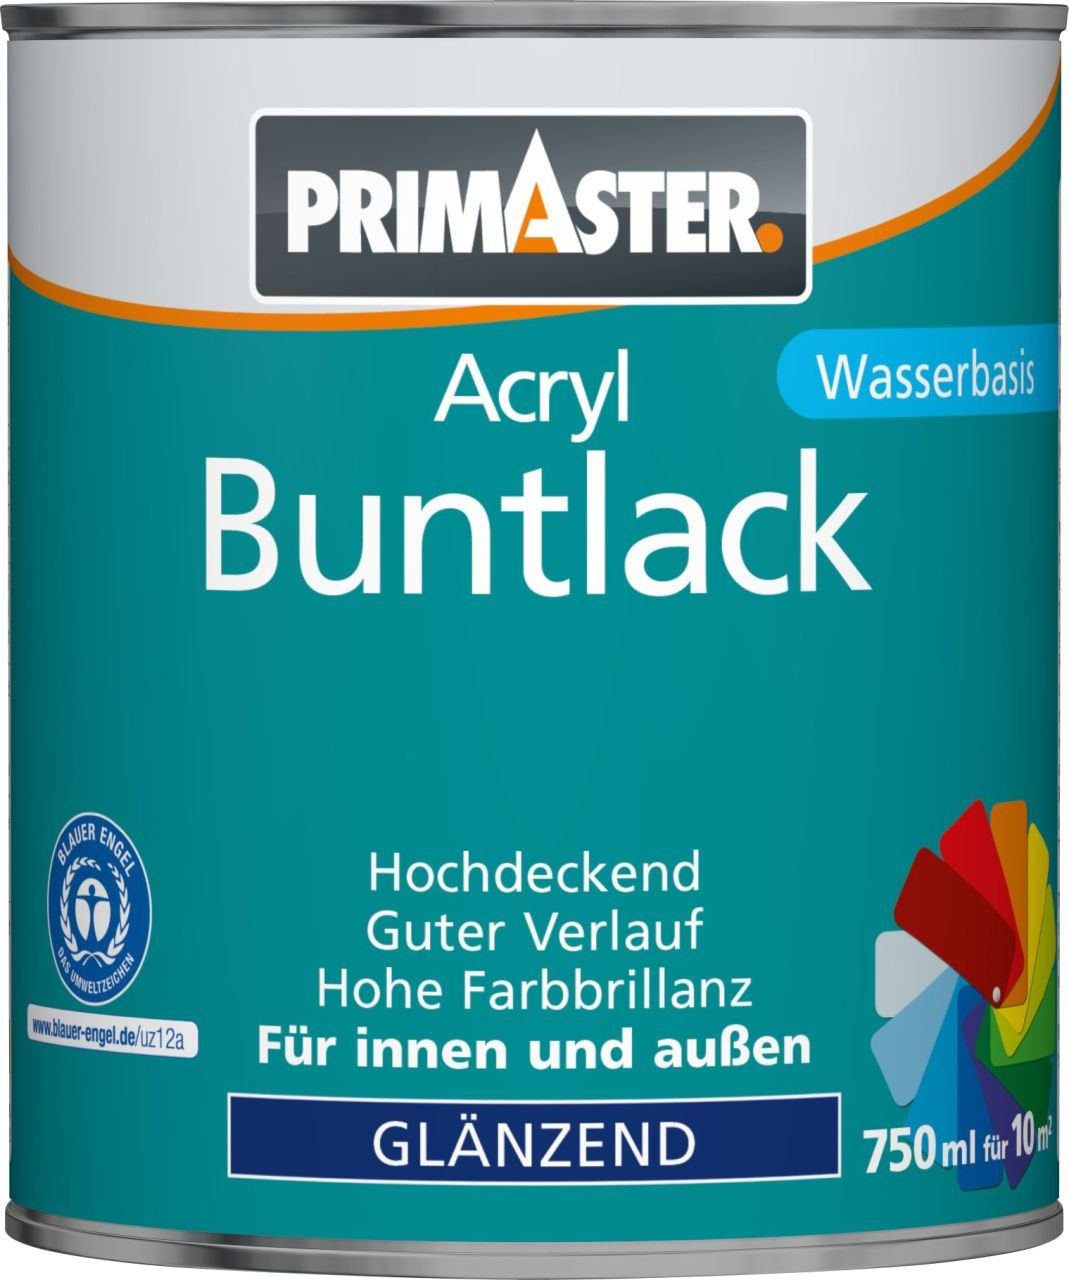 750 9001 Acryl Acryl-Buntlack Primaster RAL ml Buntlack Primaster cremeweiß